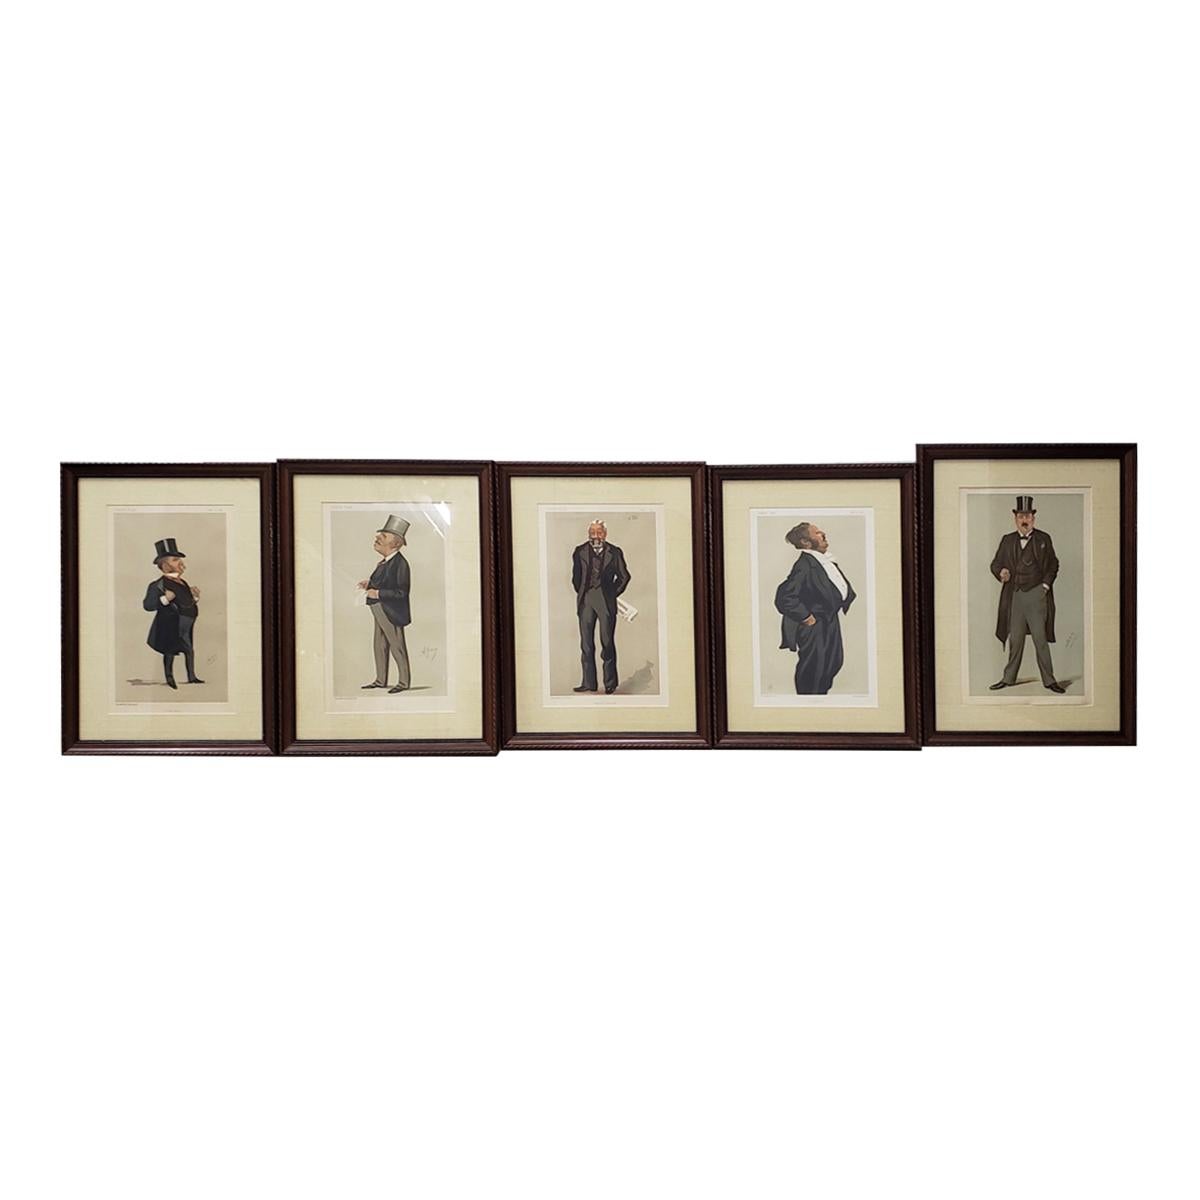 Set of Five Framed 19th Century Vanity Fair "Spy" Prints, circa 1890s